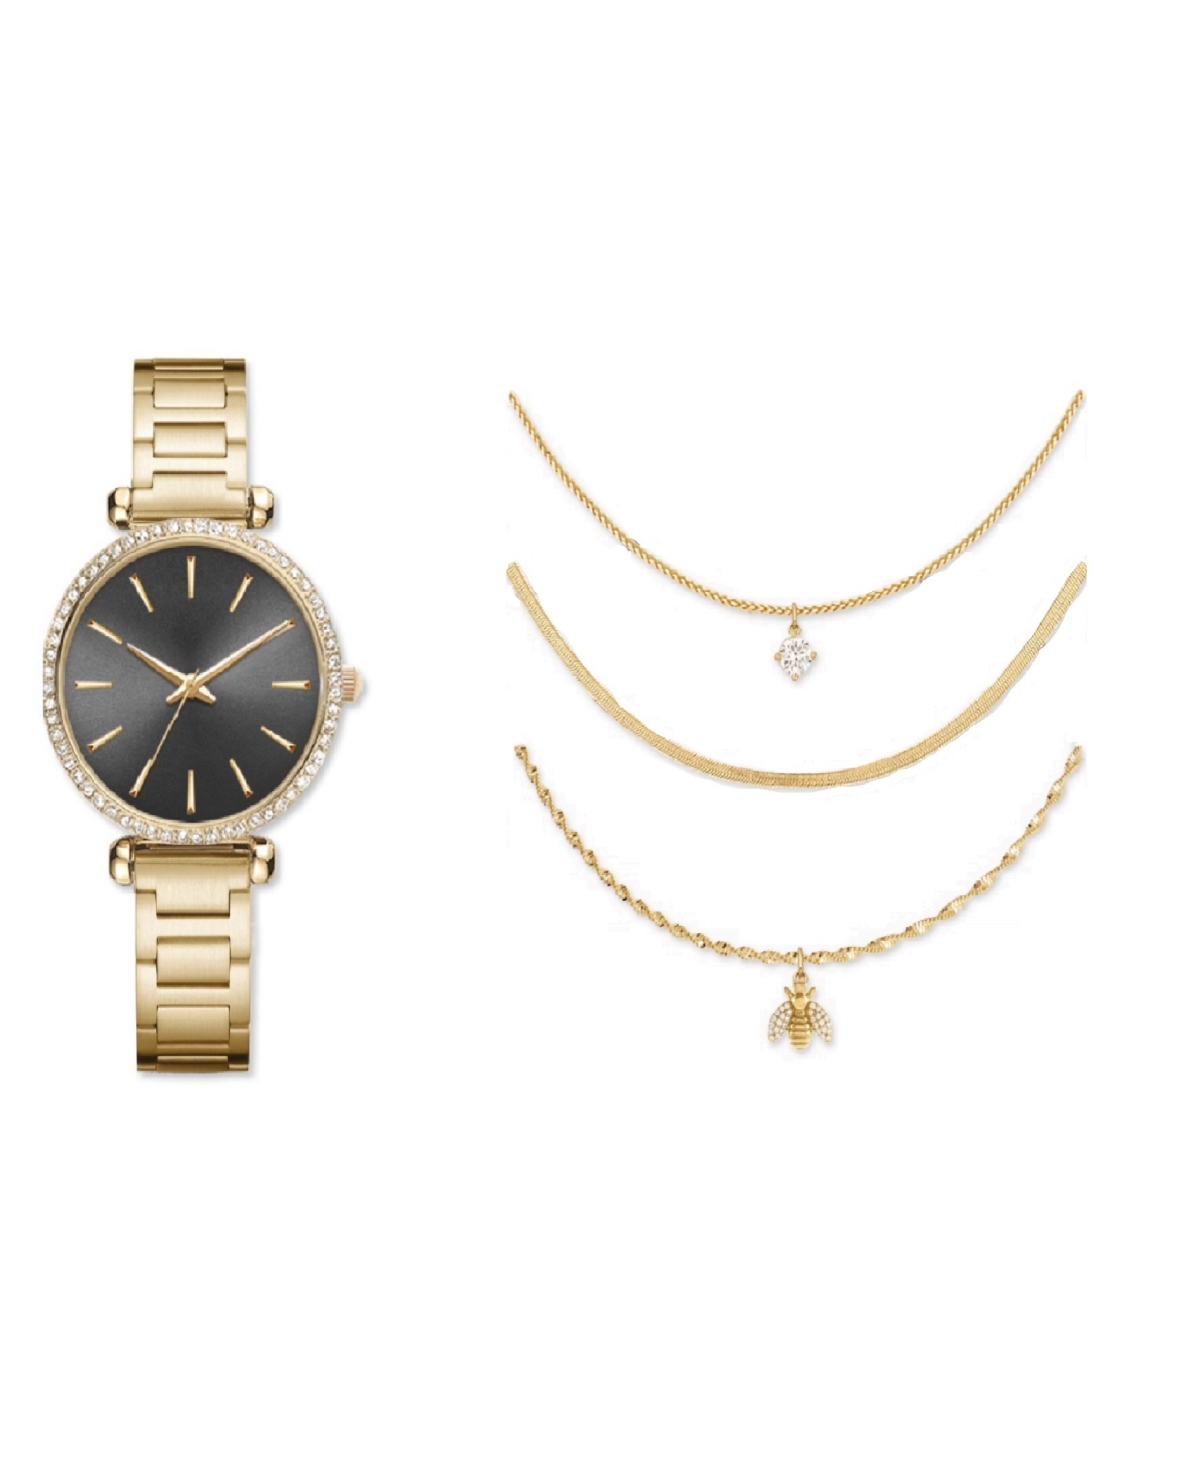 Women's Analog Shiny Gold-Tone Metal Bracelet Watch 33mm 4 Pieces Necklace Gift Set - Gold